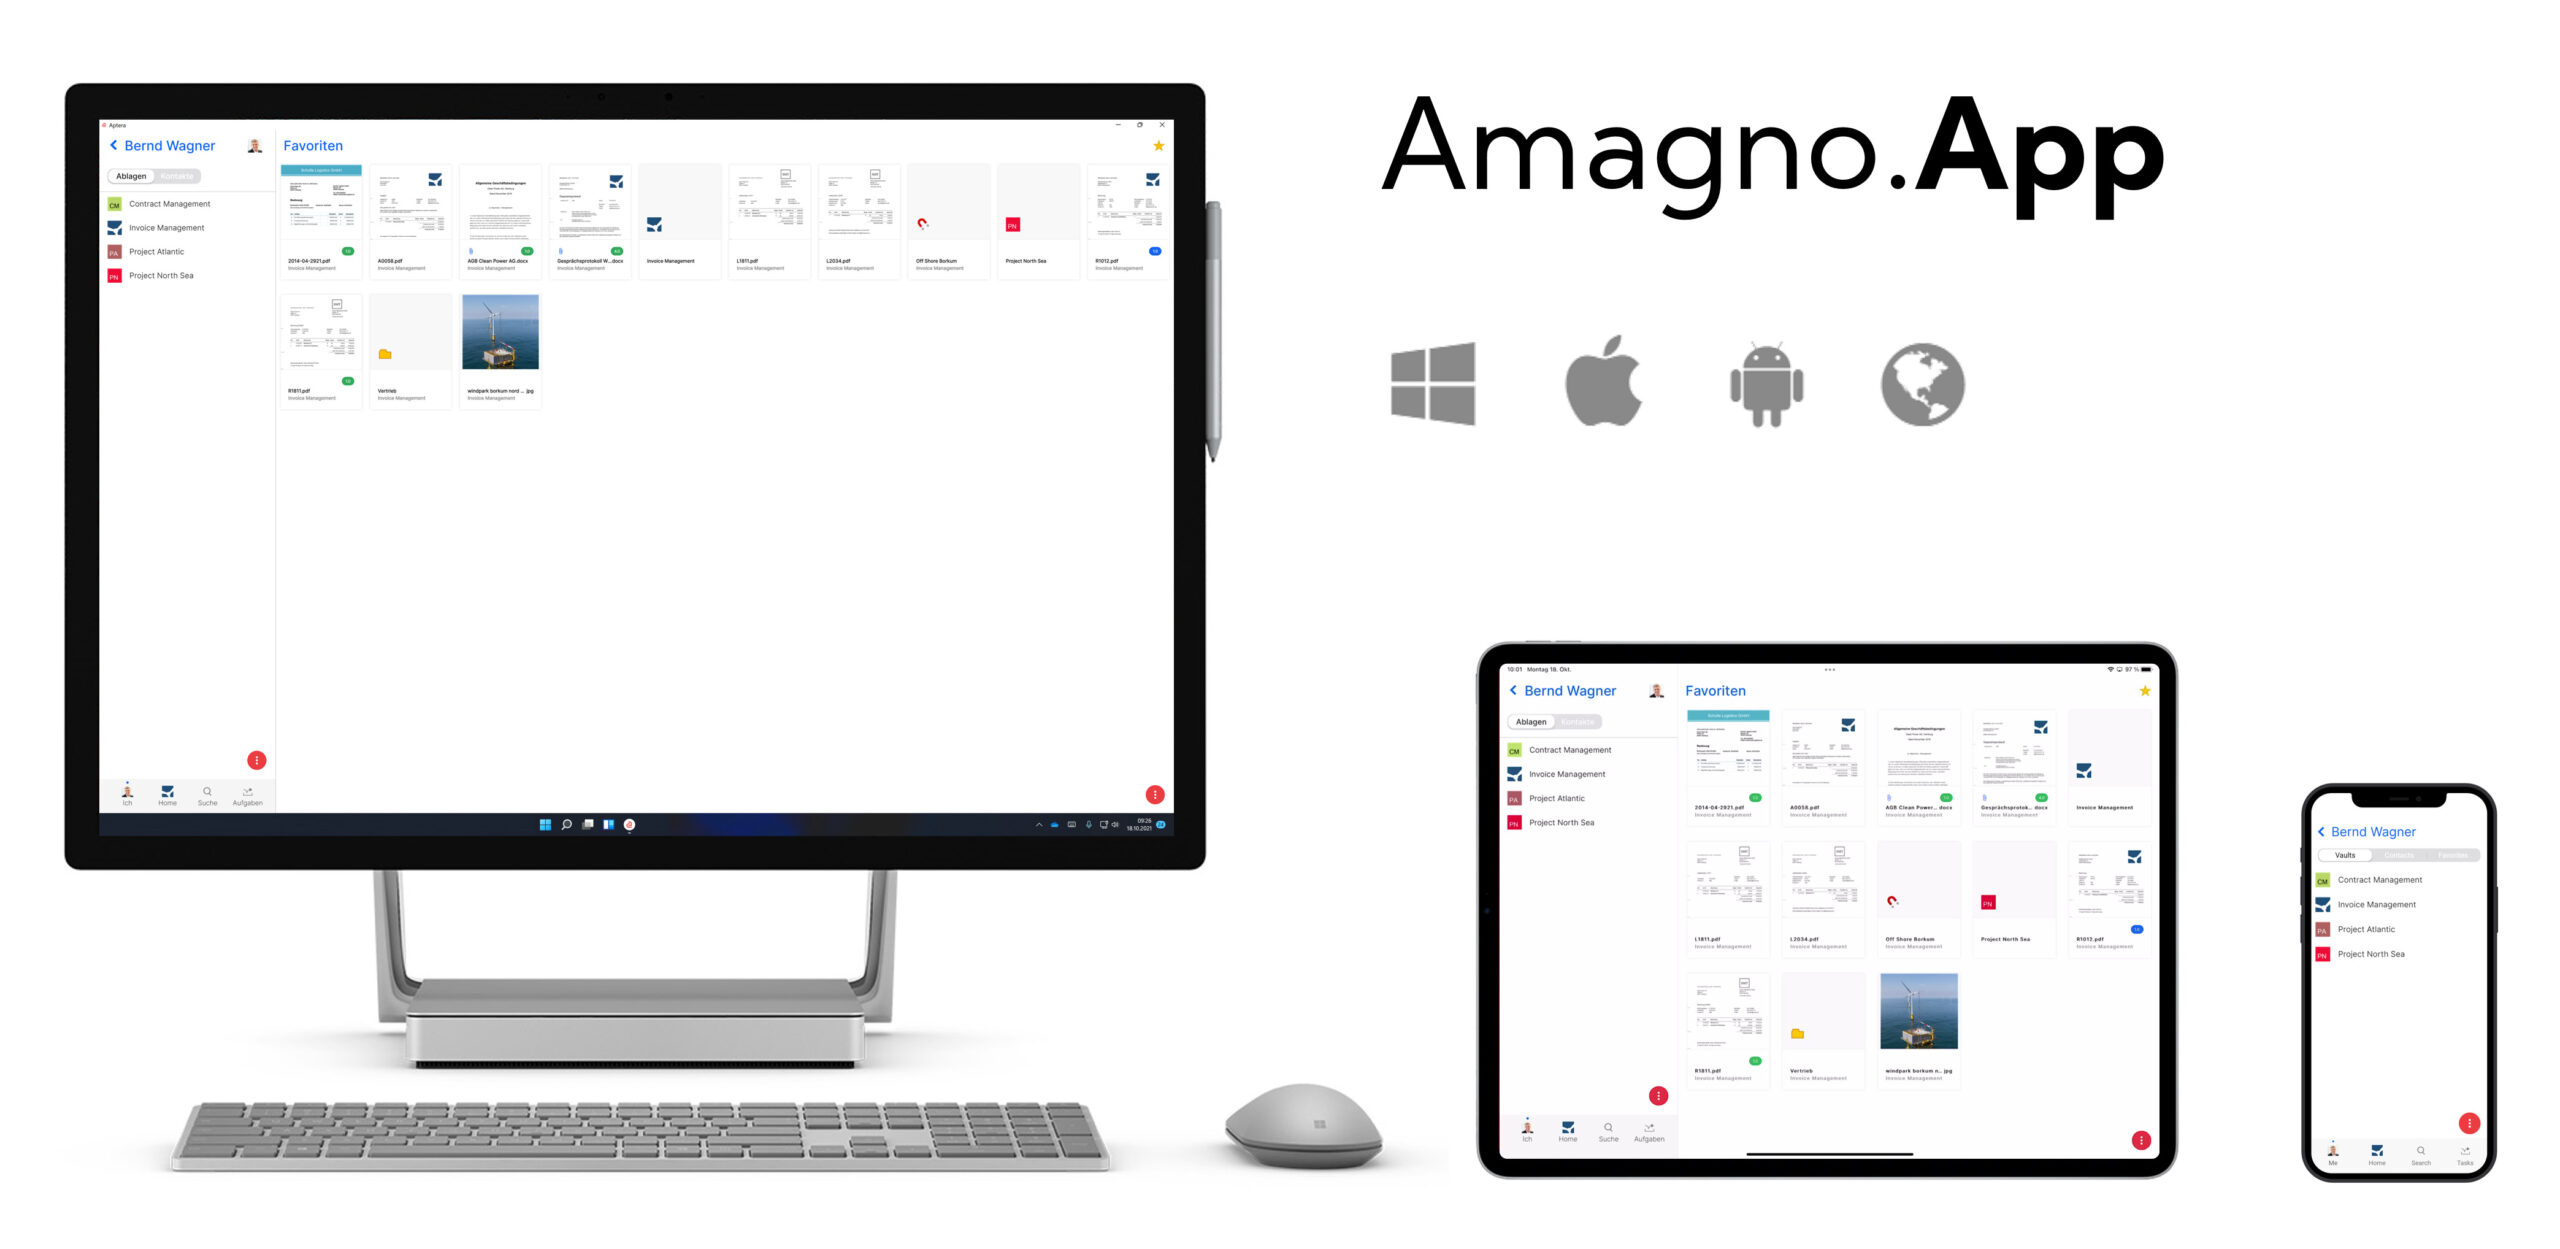 amagno app okt 21 cover 1 scaled - Amagno Clients